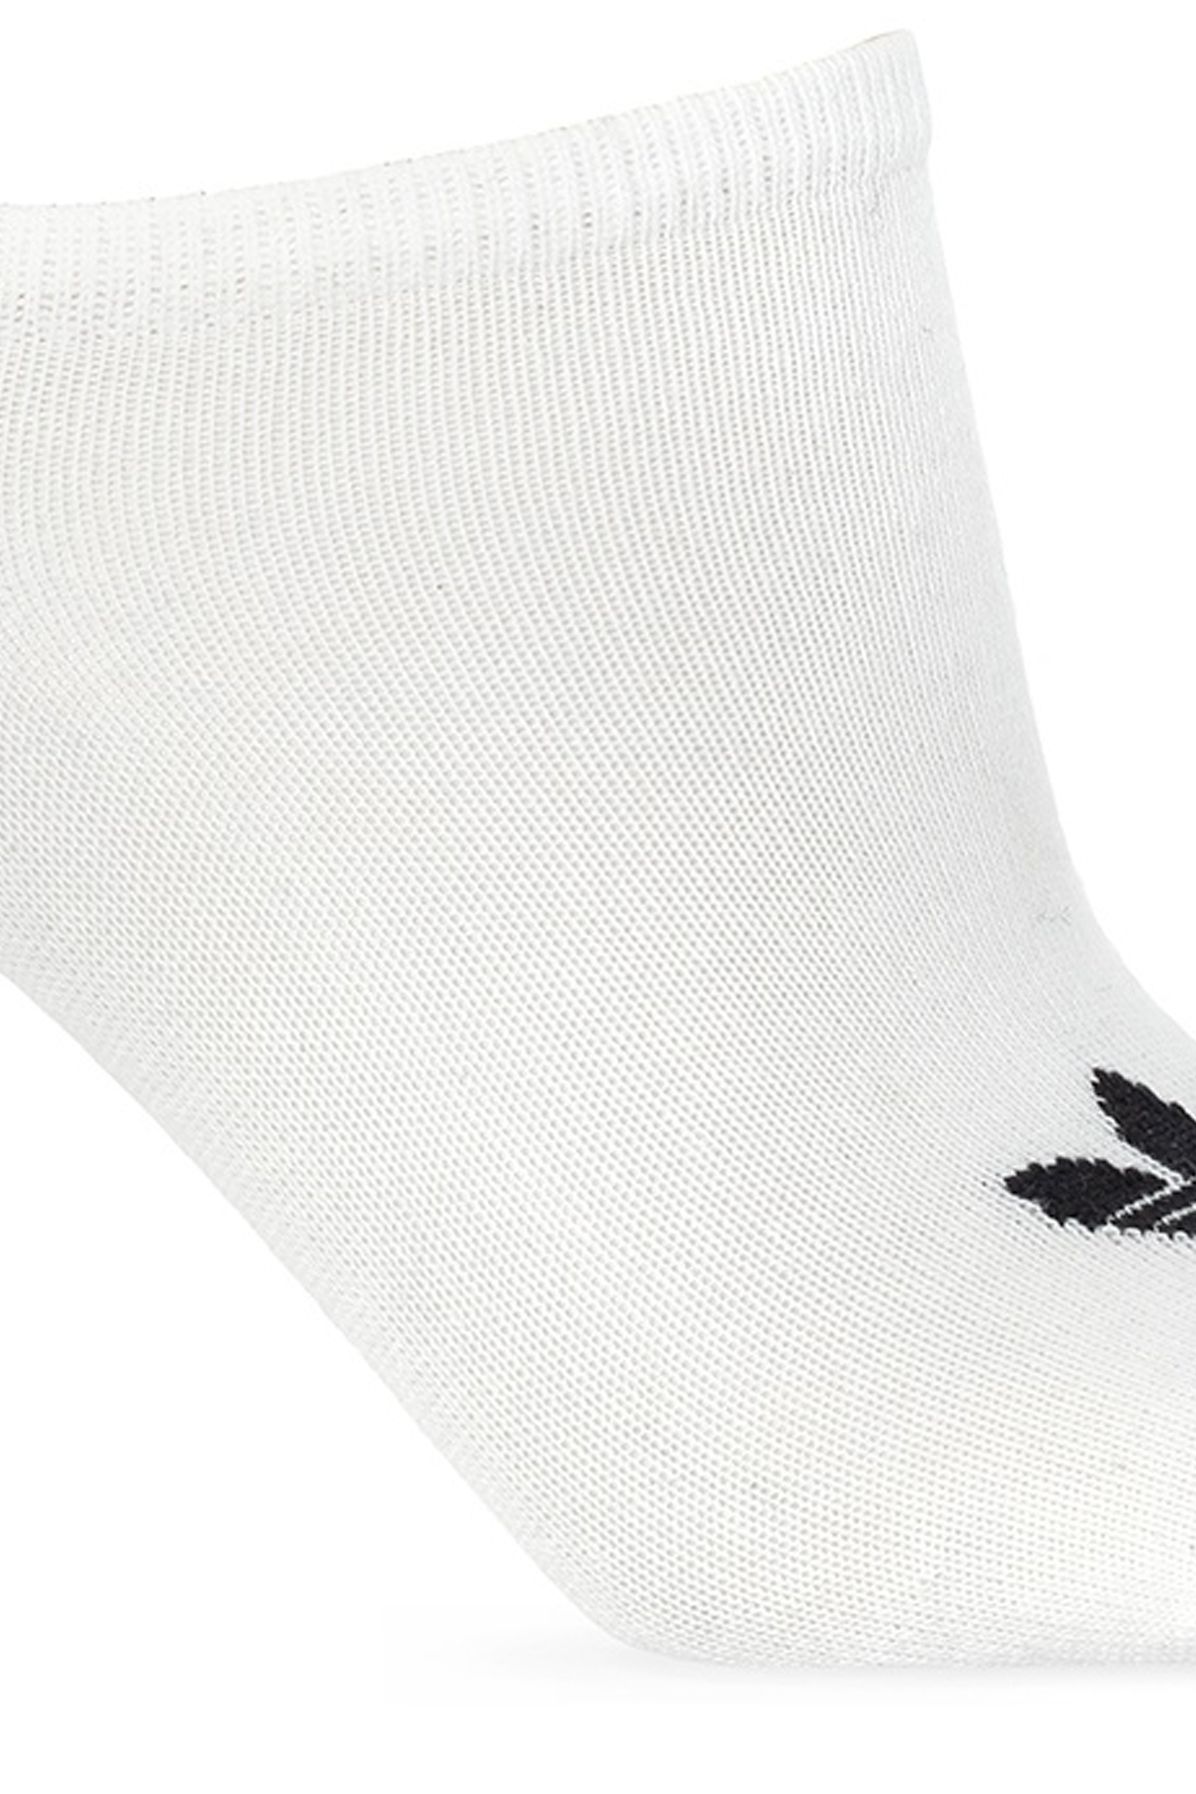 Adidas Originals Branded low-cut socks 3-pack